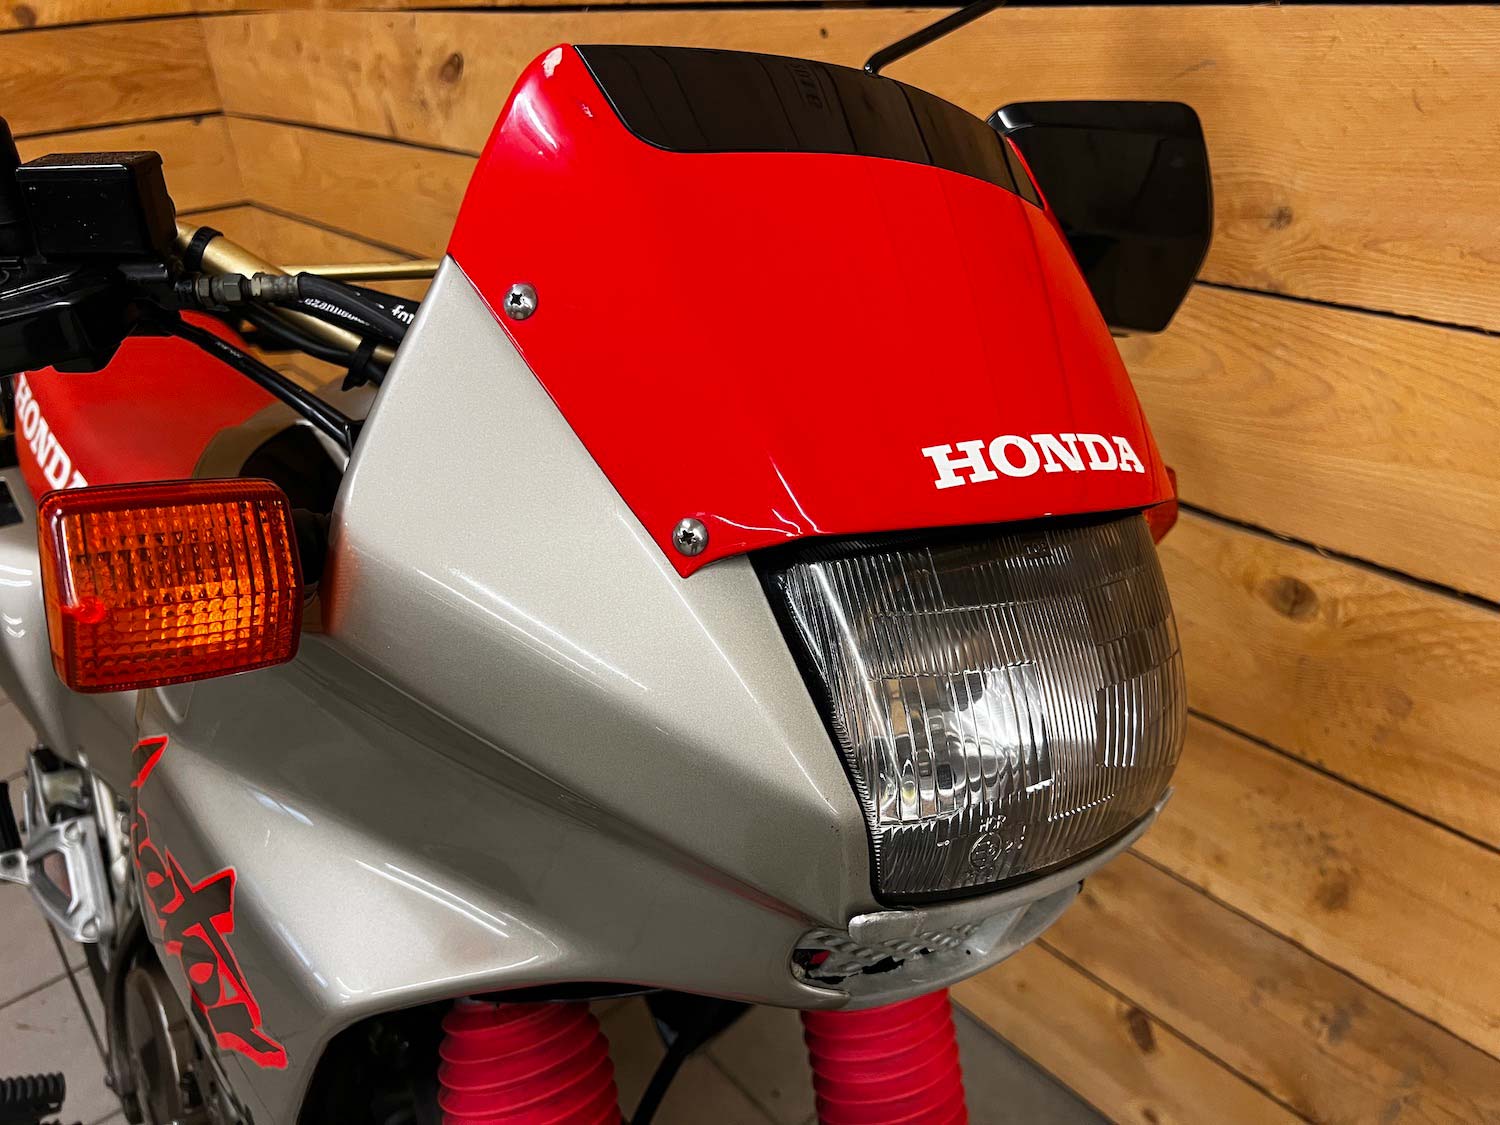 Honda_dominator_Cezanne_classic_Motorcycle_5-152.jpg